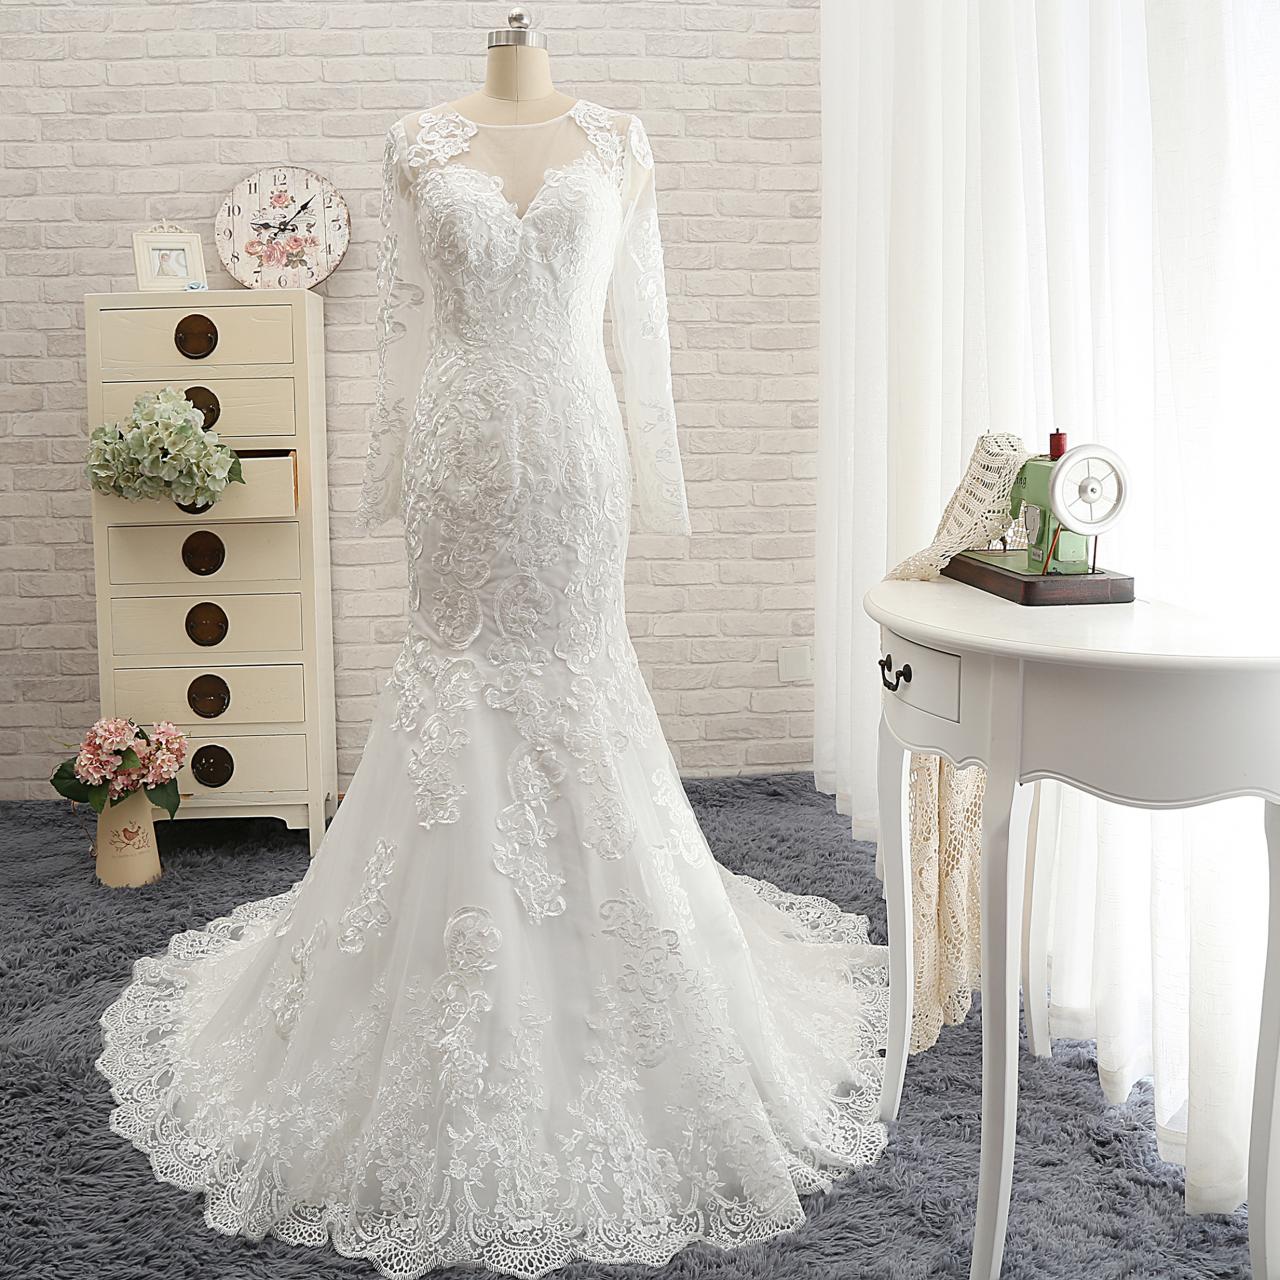 Full Lace Mermaid Wedding Dress,long Sleeves Lace Wedding Dress,wedding Dress With Long Sleeves,lace Mermaid Wedding Dress With Sleeves